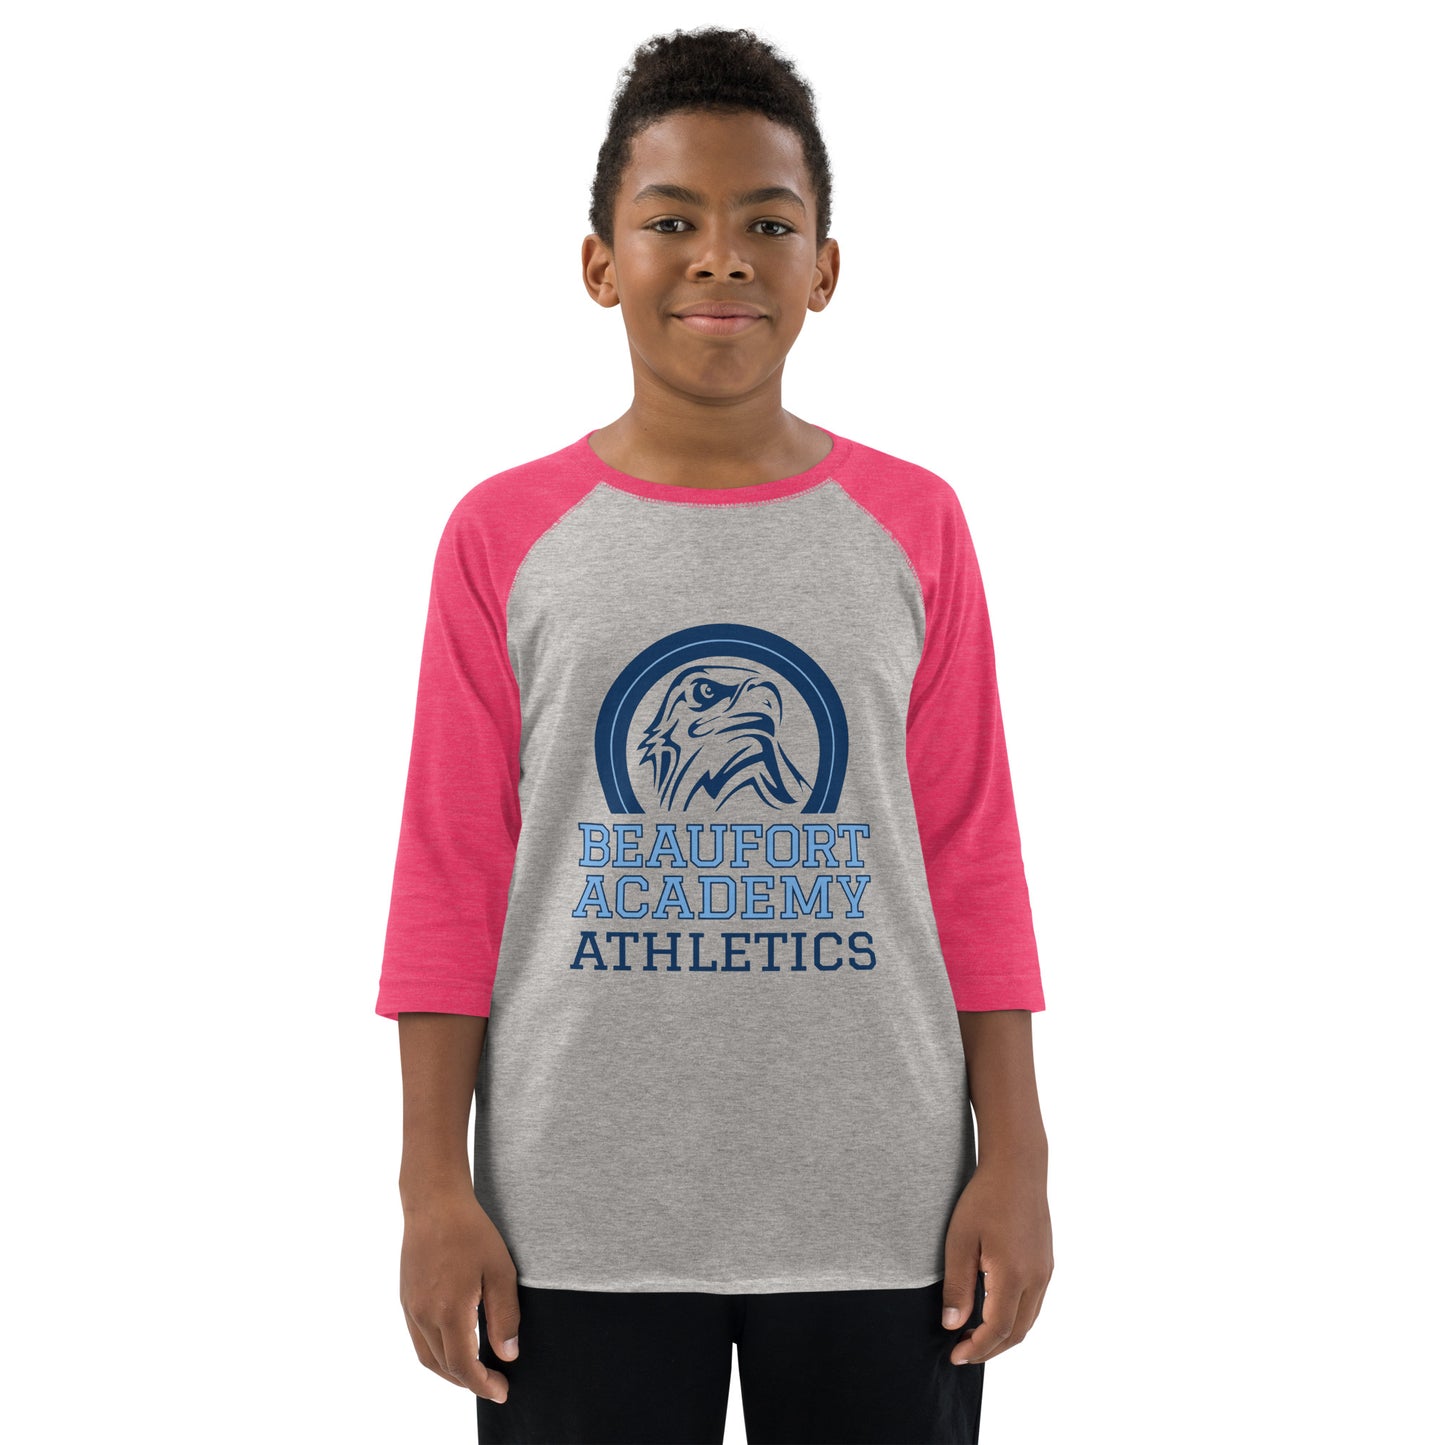 Athletics Youth Baseball Shirt